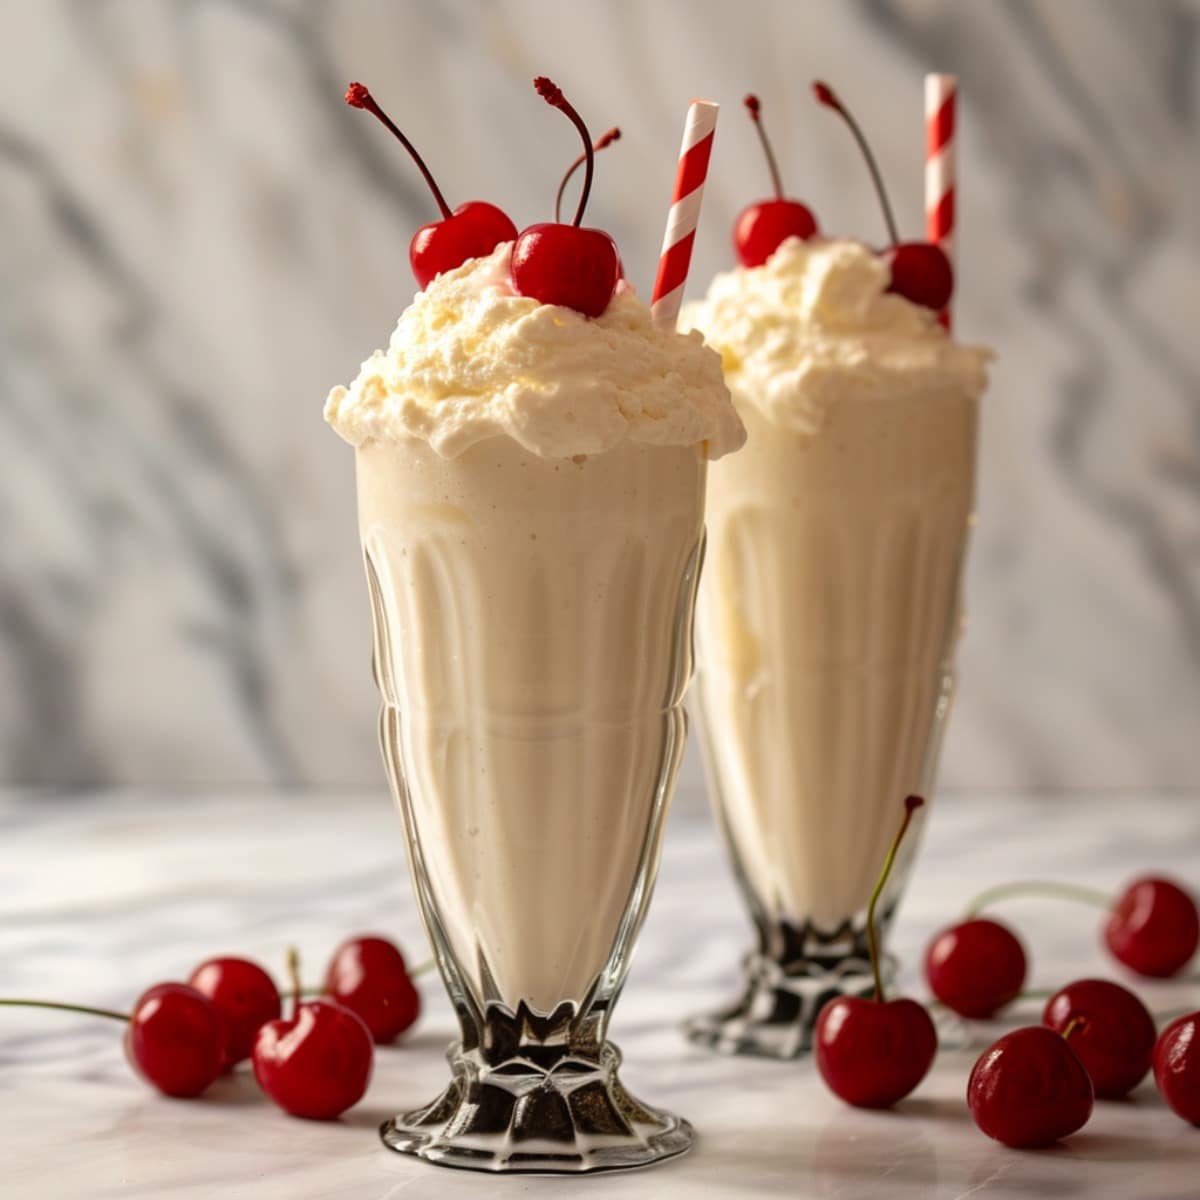 Easy Vanilla Milkshakes with Whipped Cream and Cherries on top